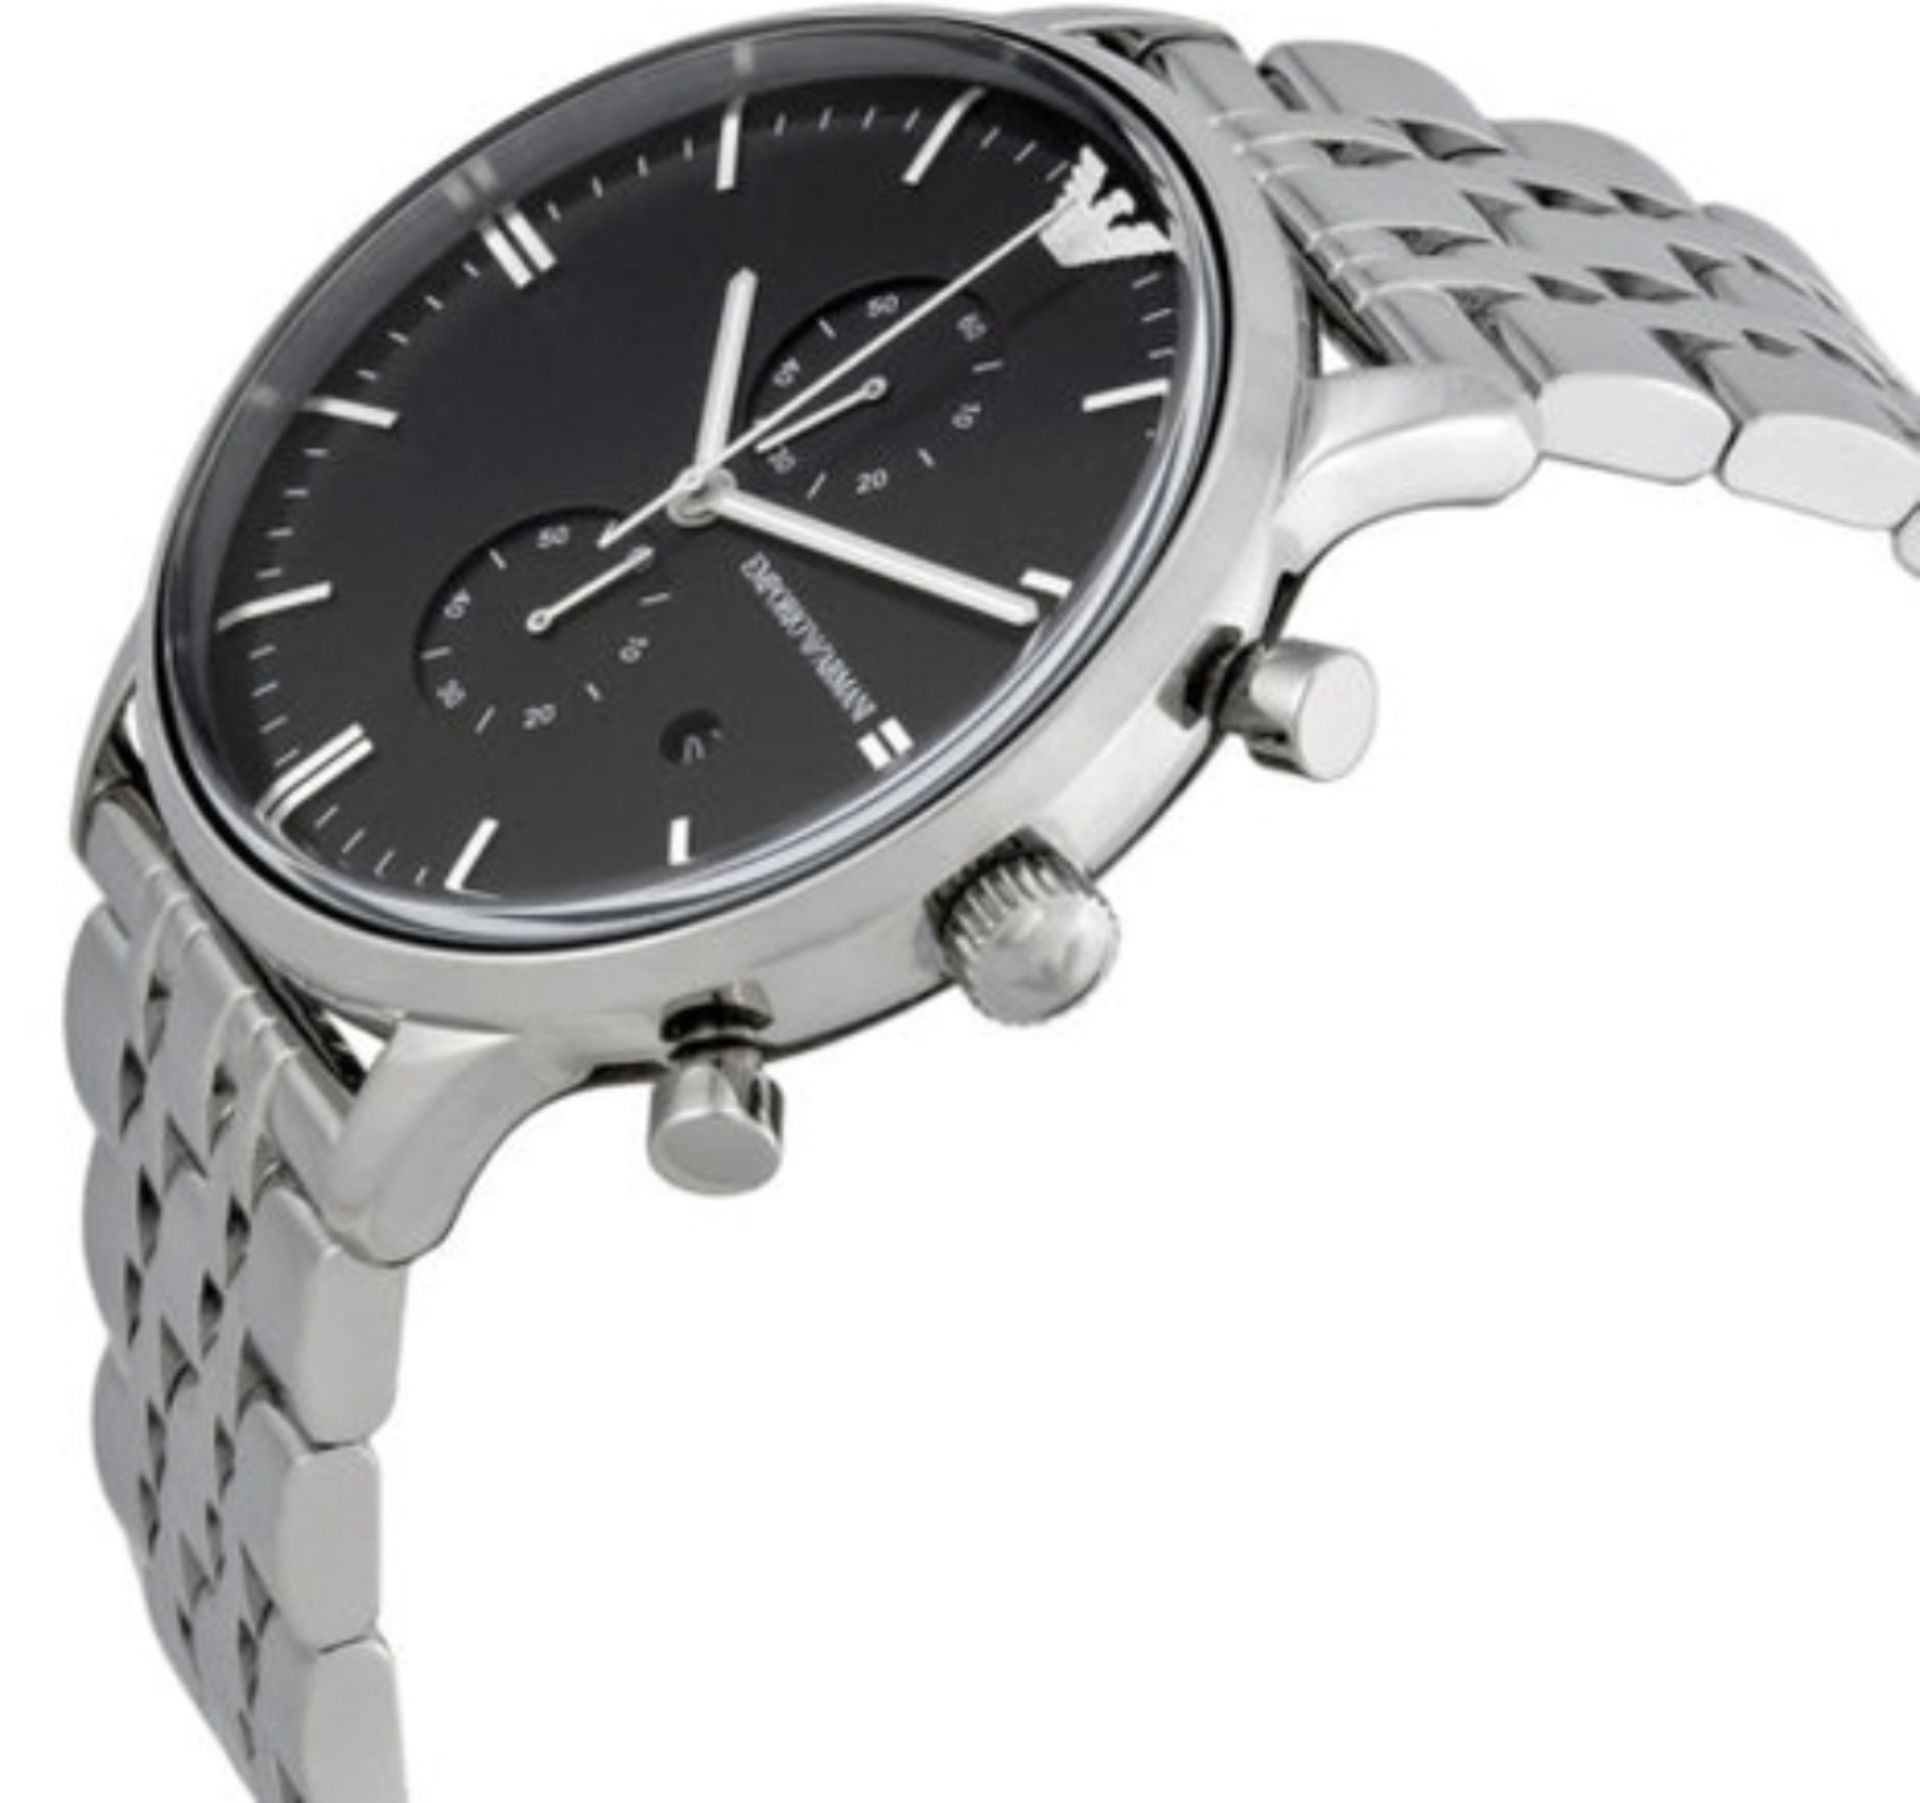 Emporio Armani AR0389 Men's Gianni Black Dial Silver Bracelet Chronograph Watch - Image 5 of 8